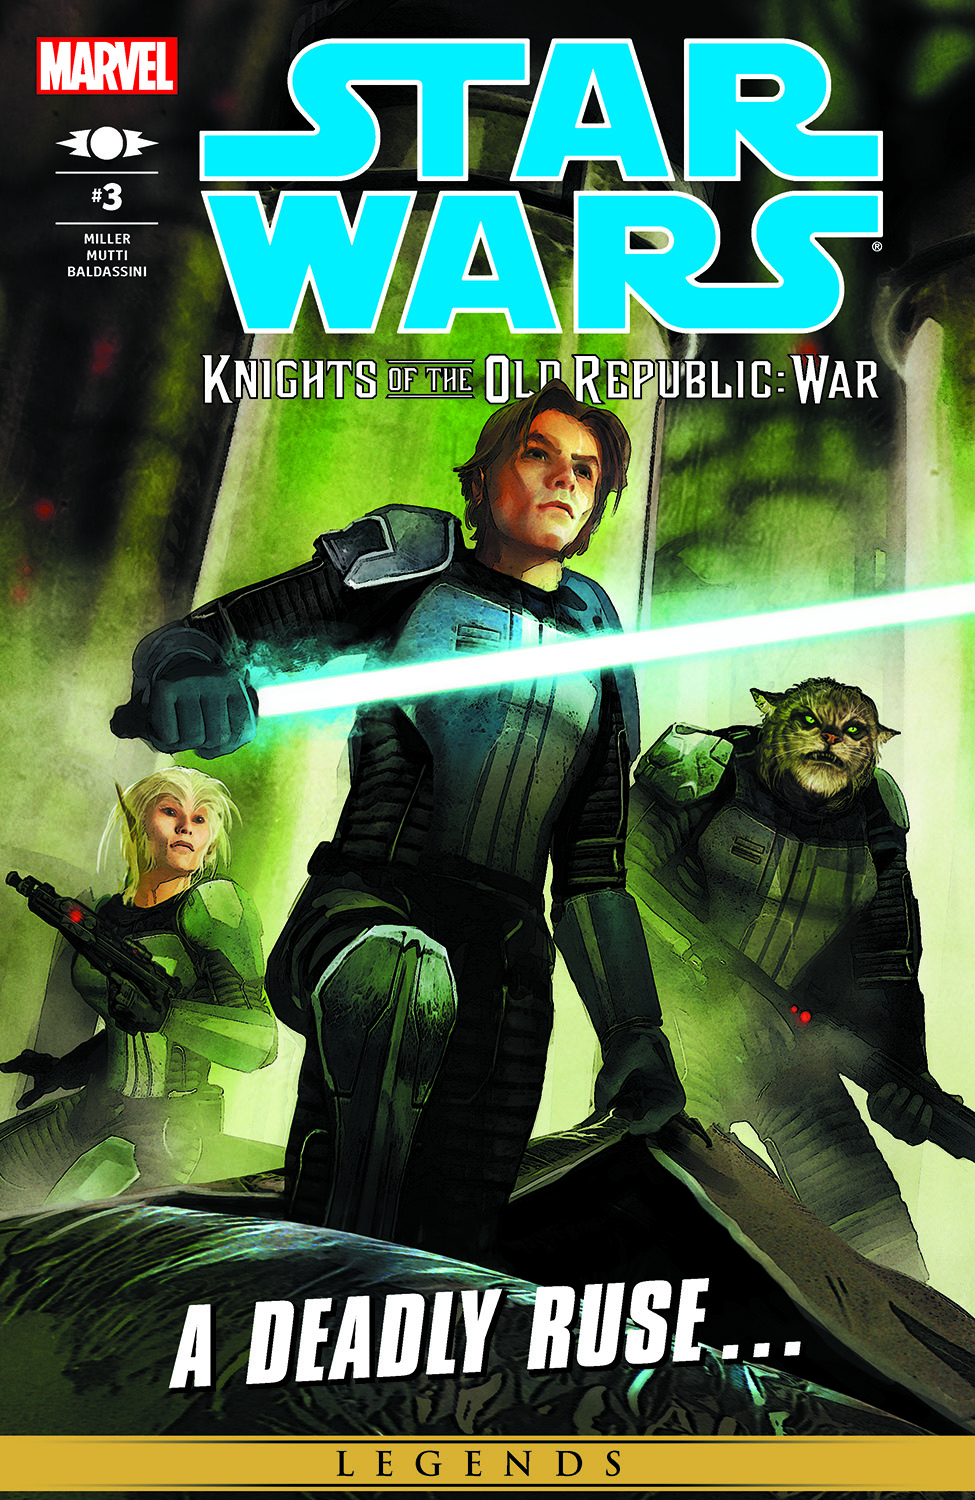 Star Wars: Knights of the Old Republic - War (2012) #3